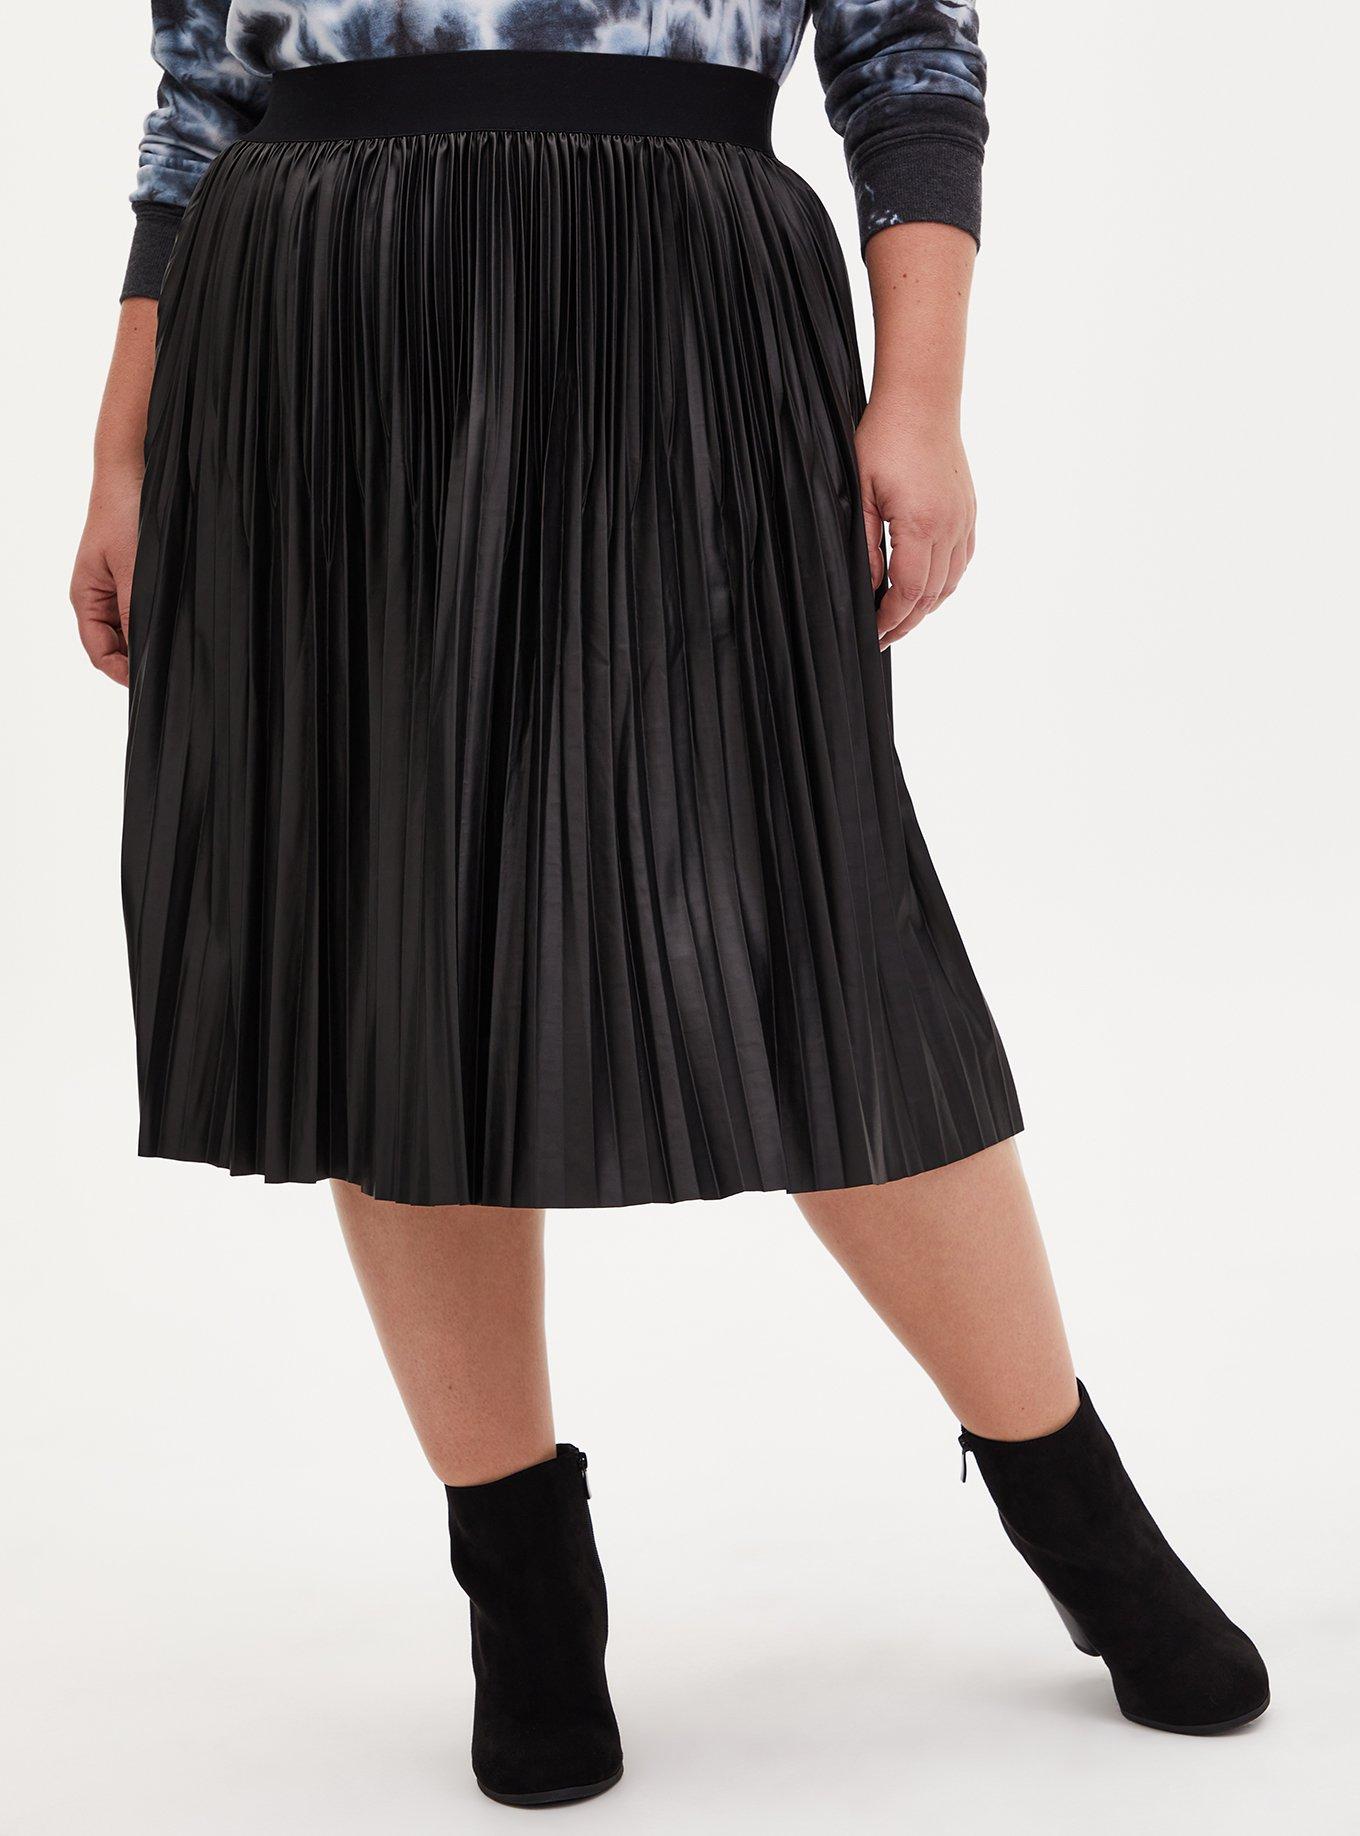 SPANX, Skirts, Spanx Faux Leather Skater Skirt Size Medium